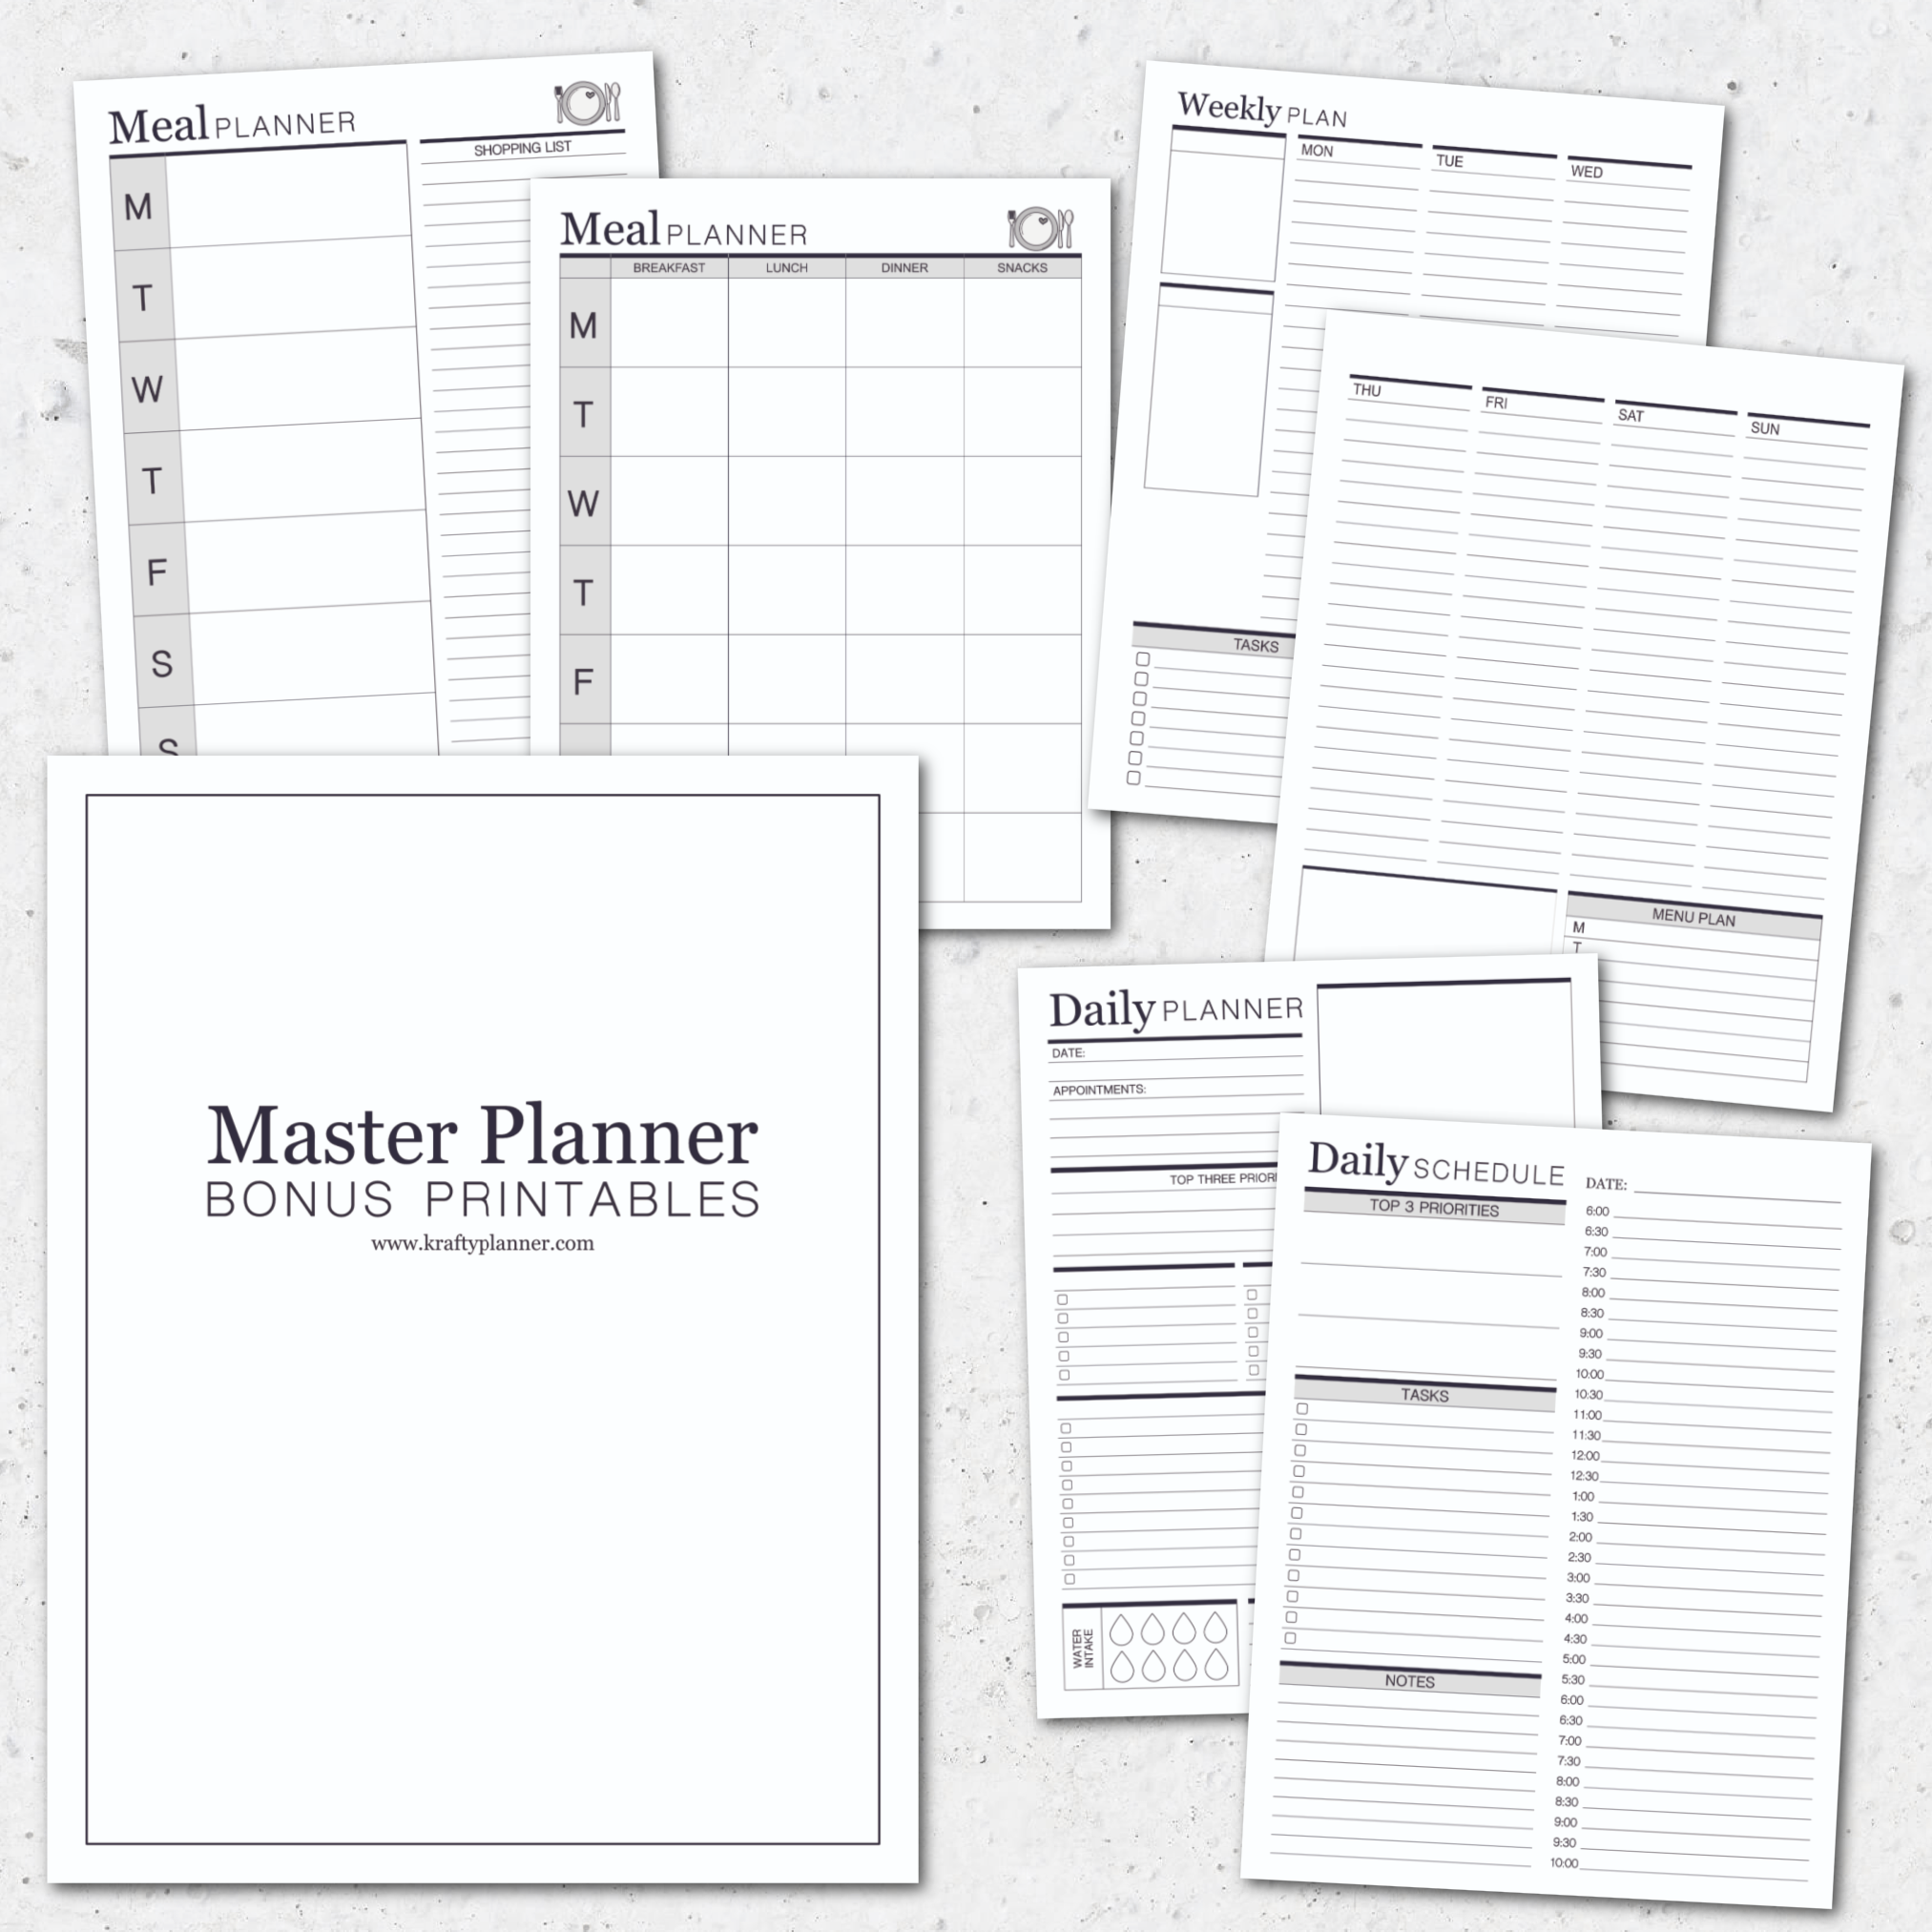 Master Planner Bonus Printables.png